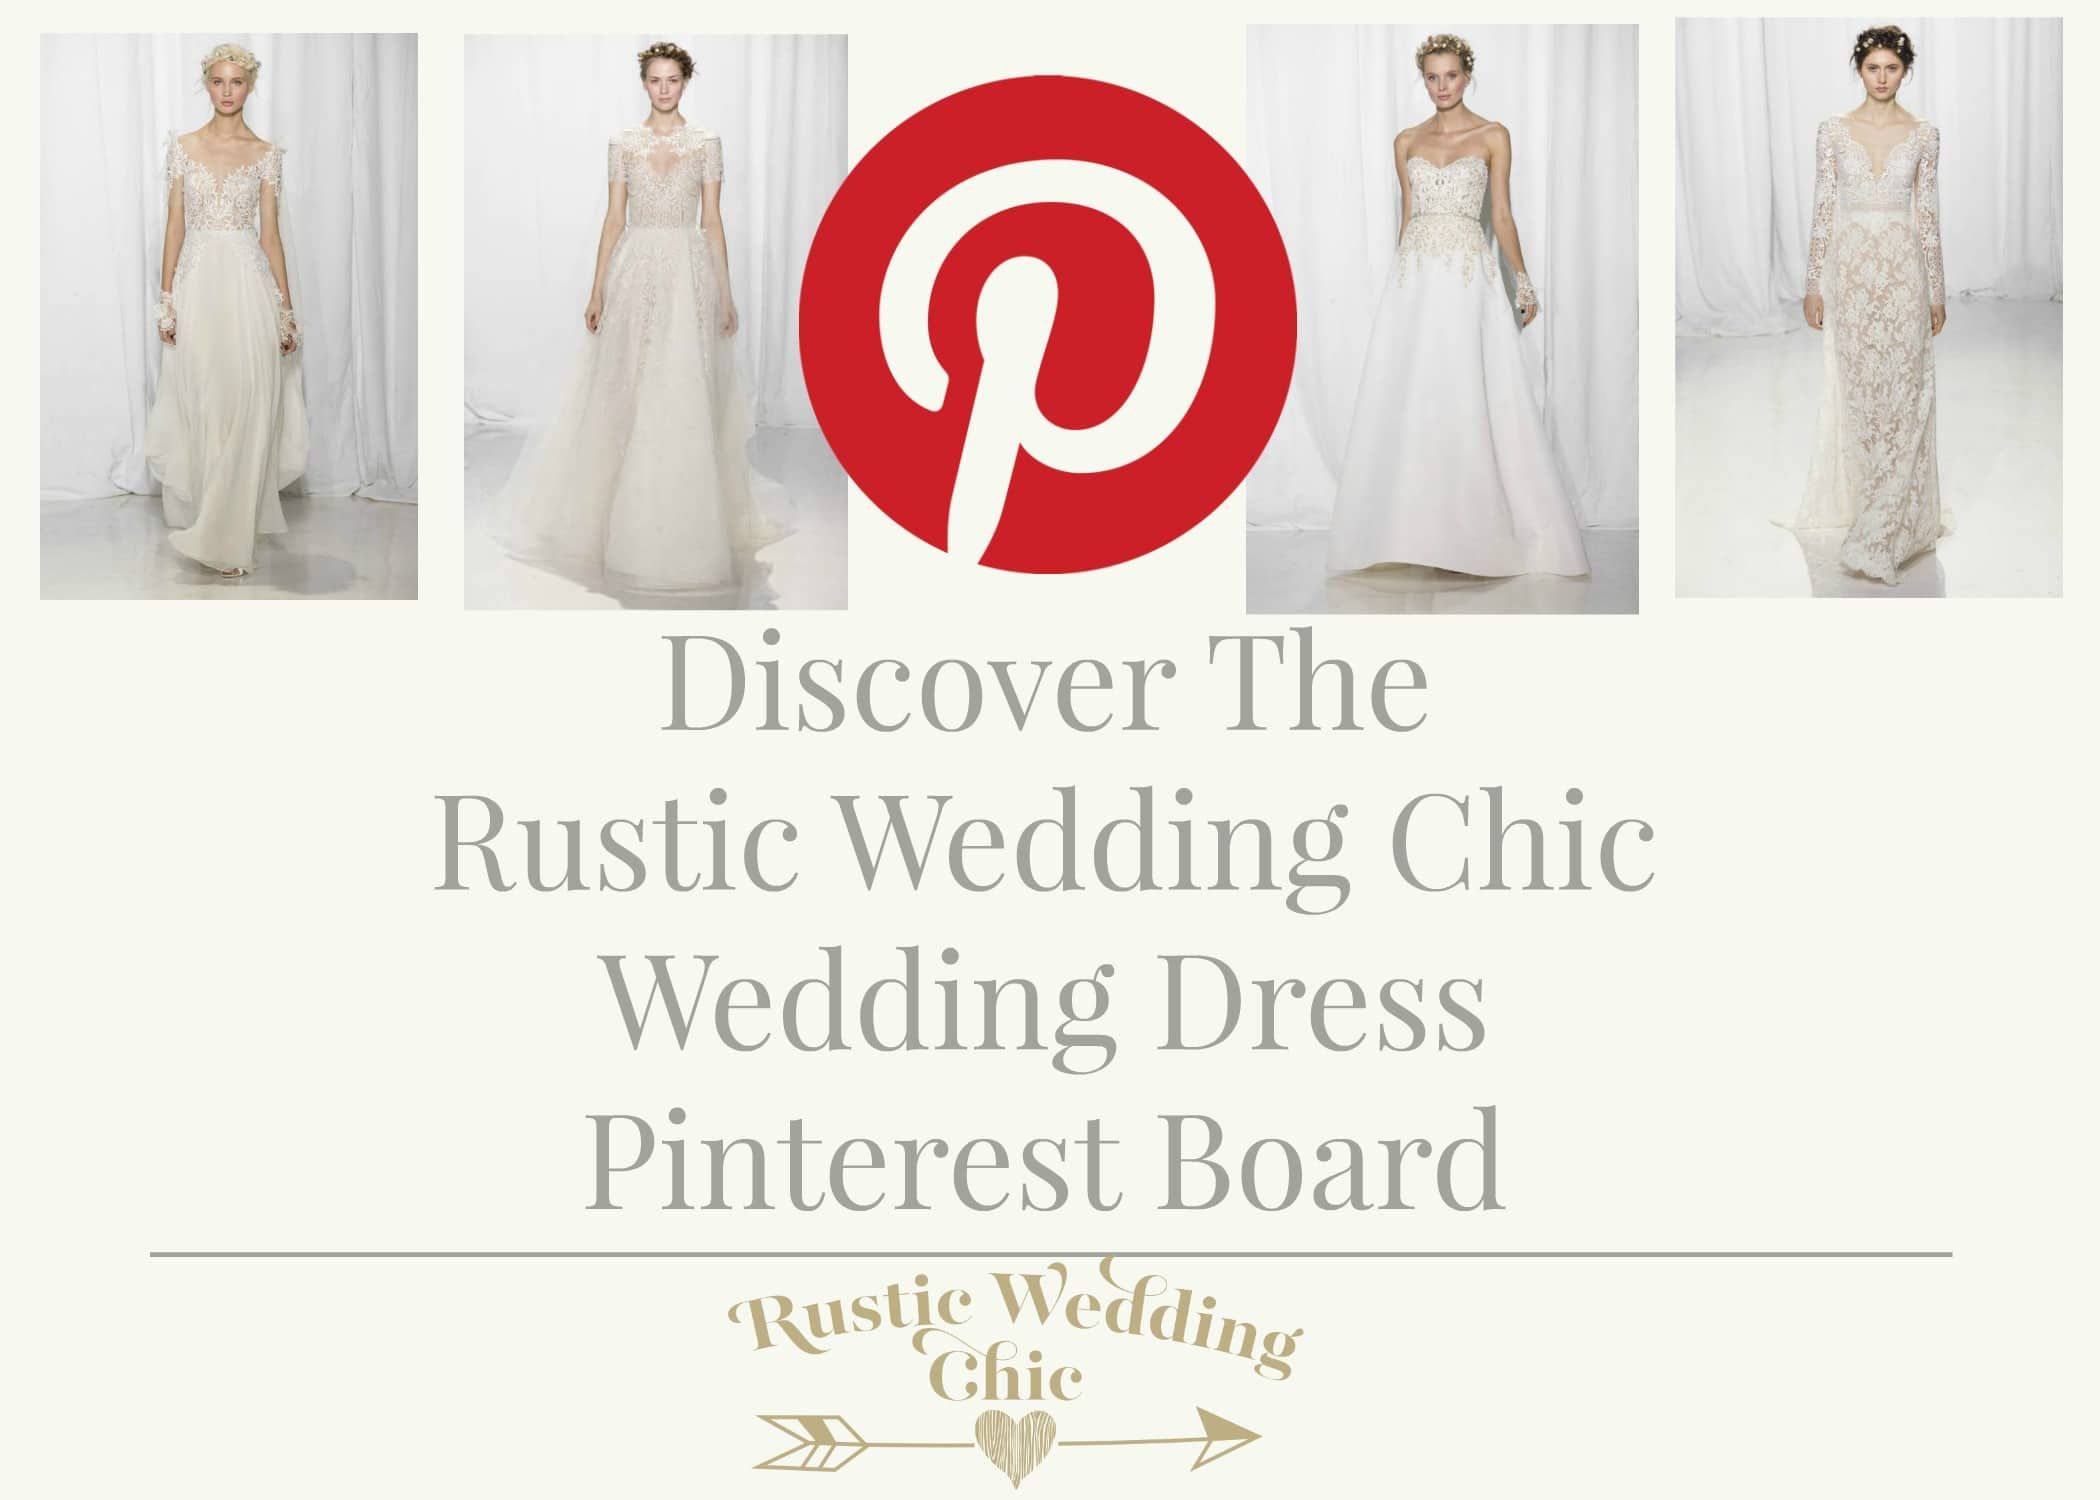 The Rustic Wedding Chic Pinterest Board